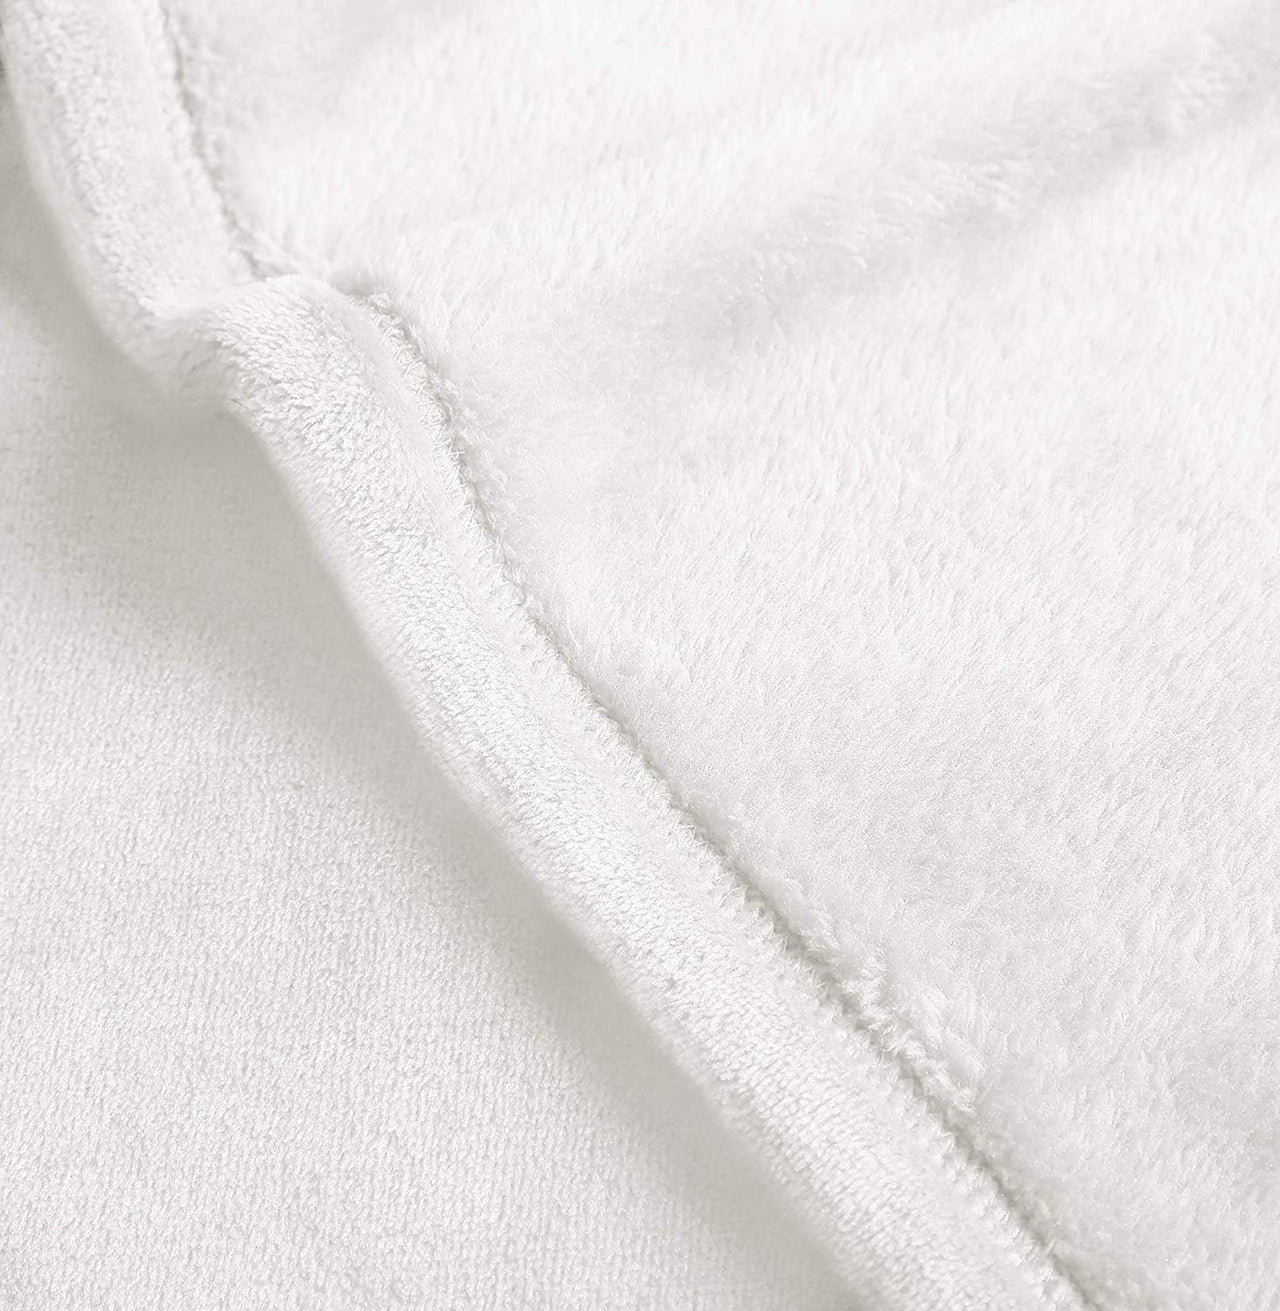 Custom Dog Blanket - Personalized Creative Gift Idea - Best Mom In My Heart for Dog Lover - Fleece Blanket